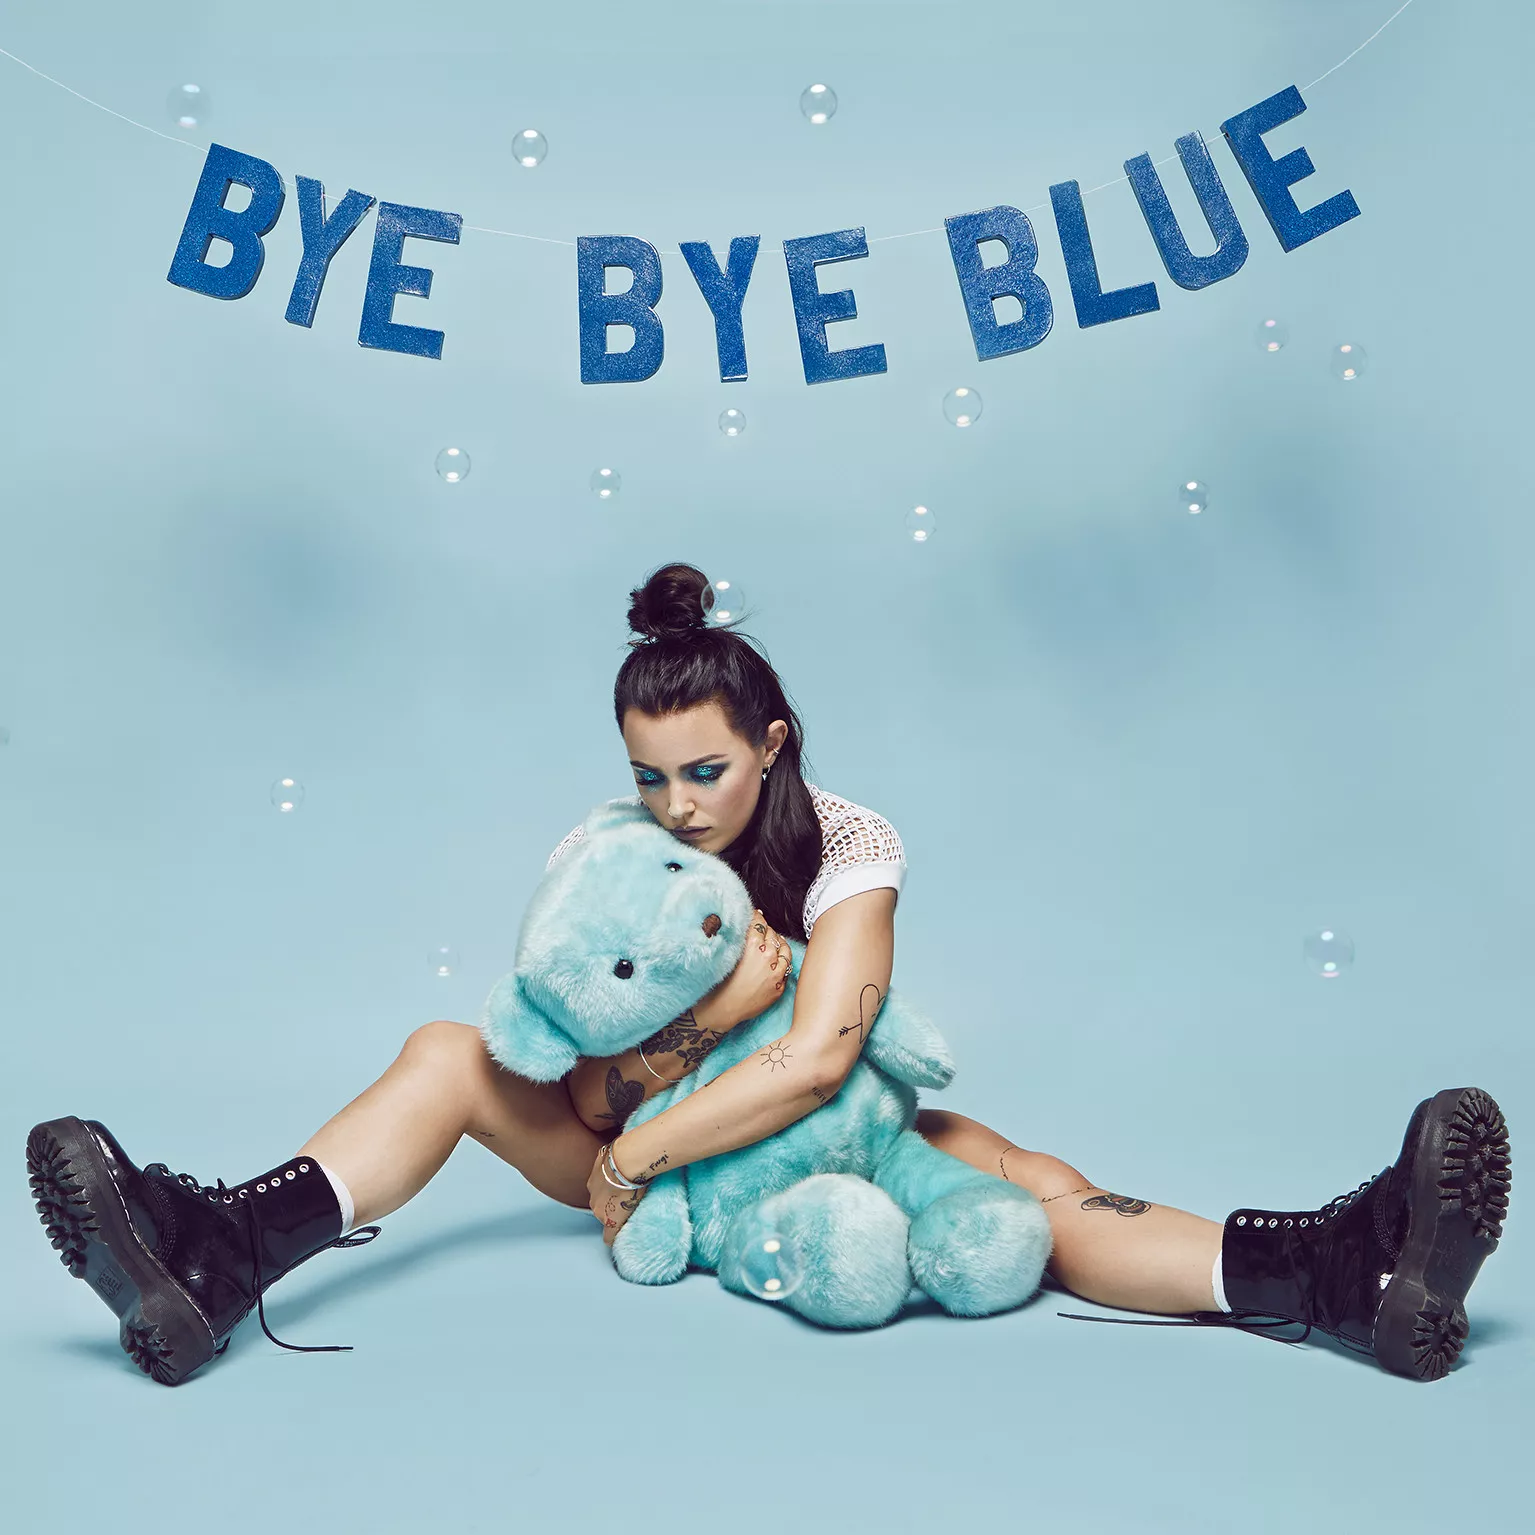 Bye Bye Blue - Miriam Bryant